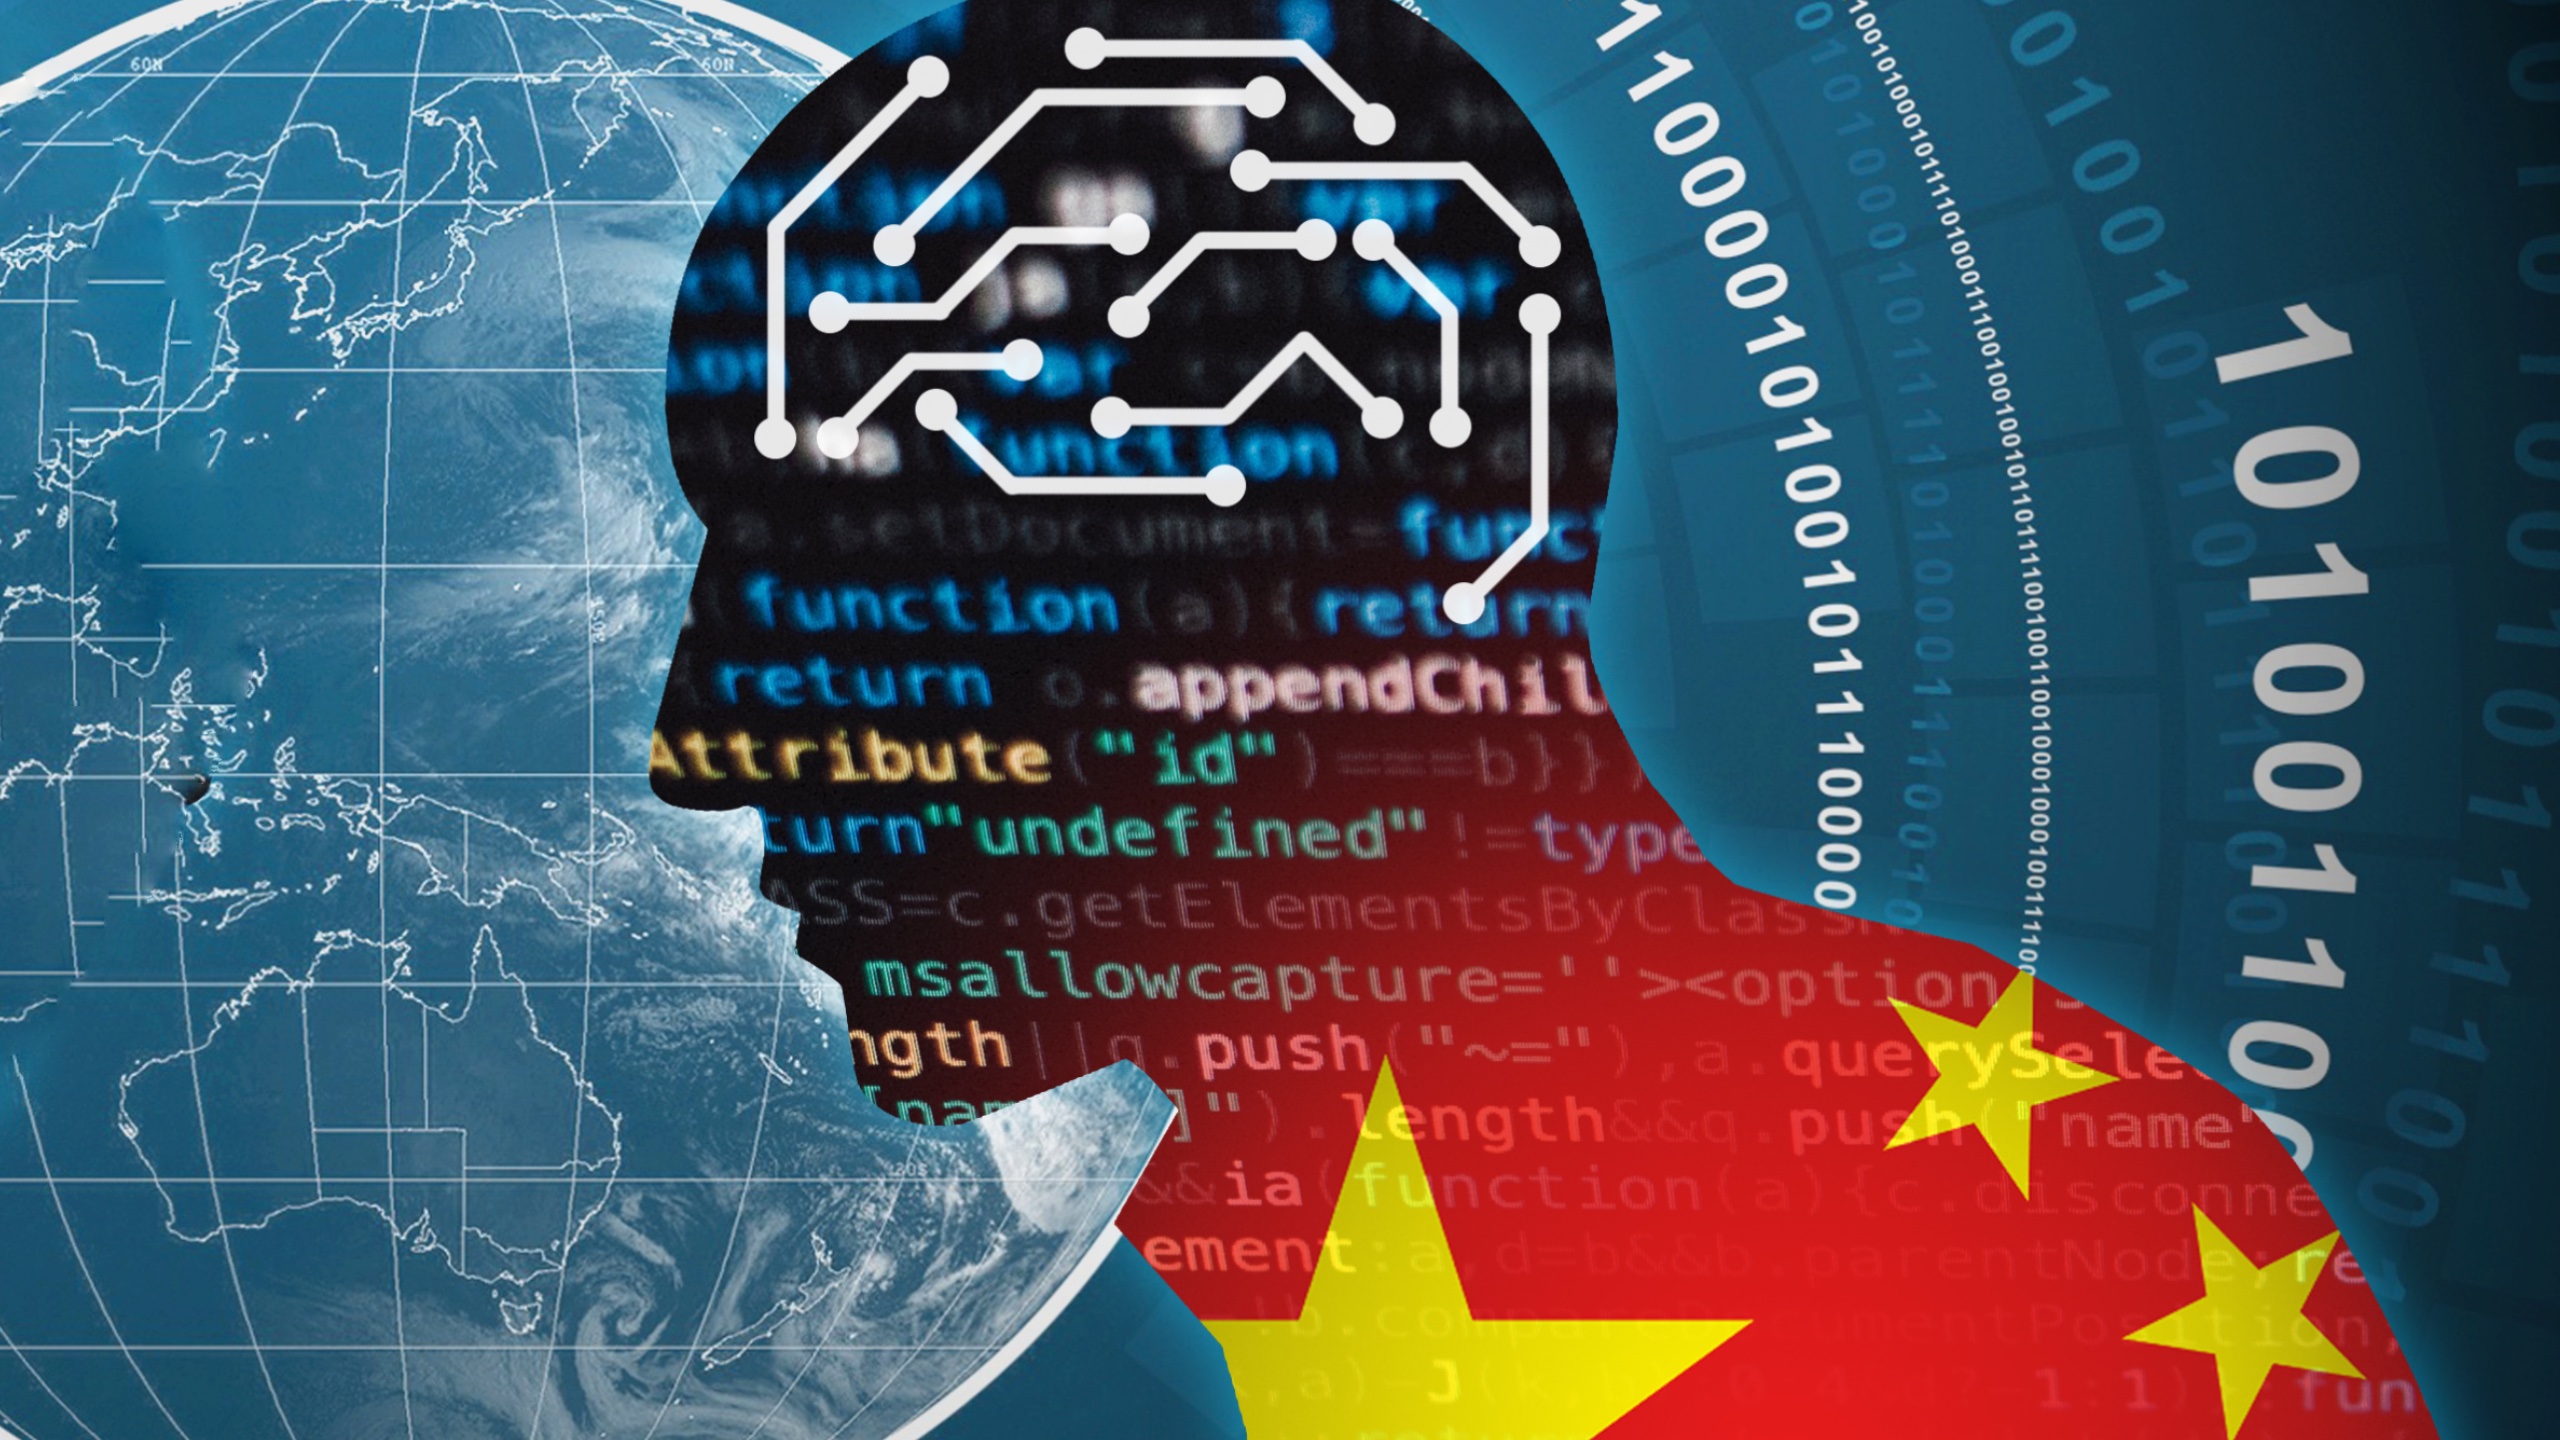 Tiongkok Mempercepat Integrasi AI dengan Lebih dari 40 Model yang Disetujui